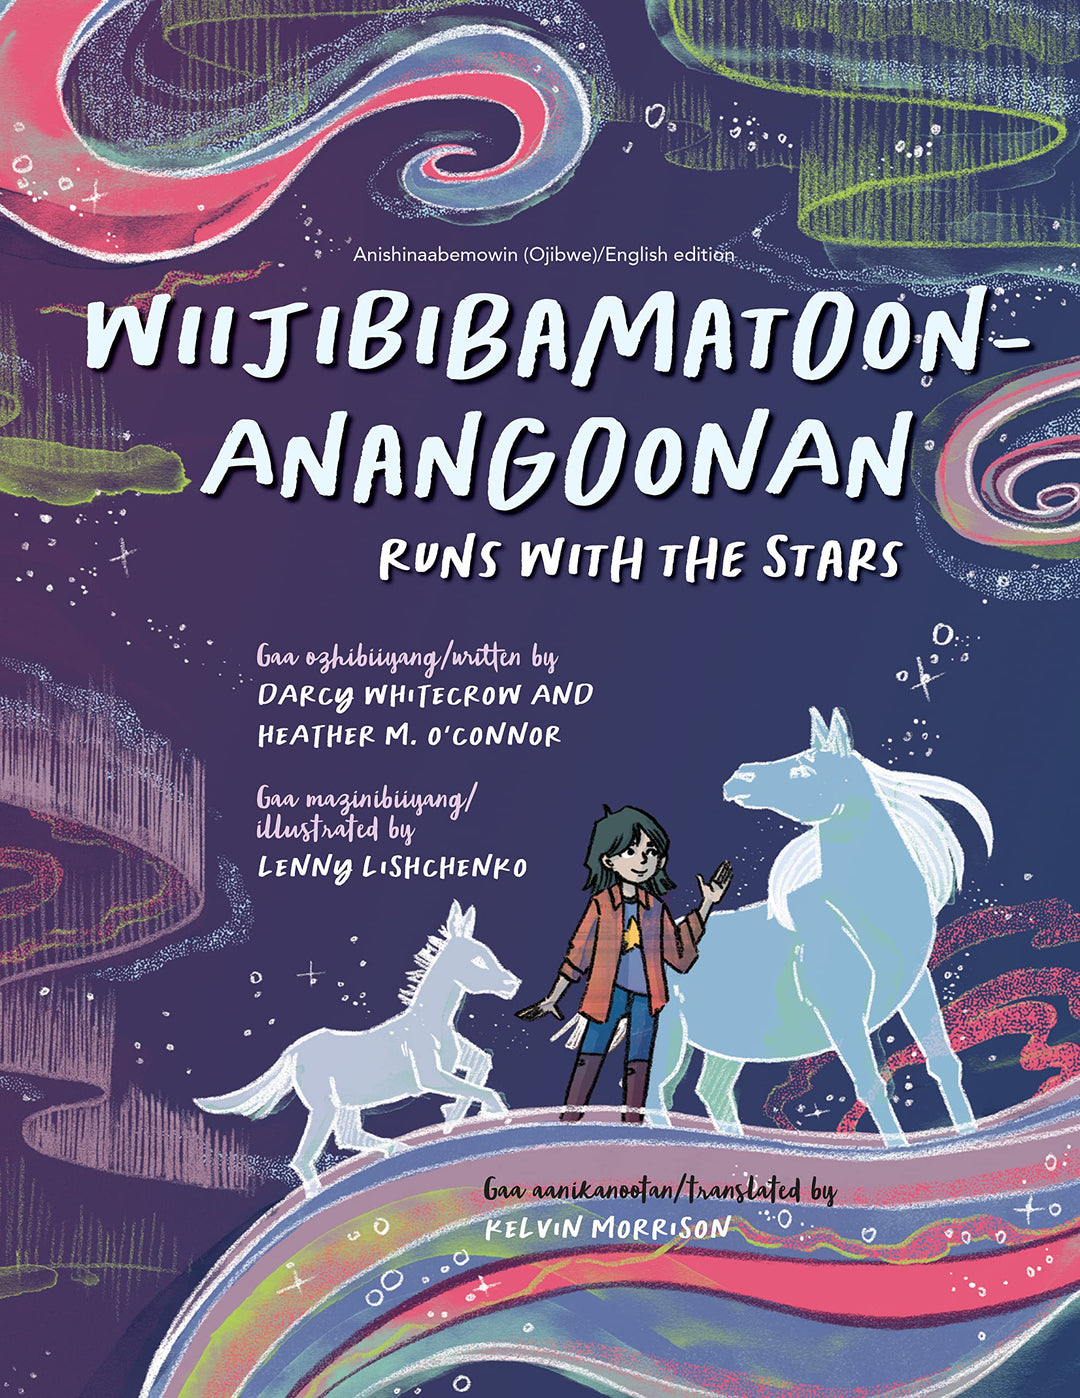 Wiijibibamatoon Anangoonan / Runs with the Stars by Darcy Whitecrow & Heather M. O'Connor